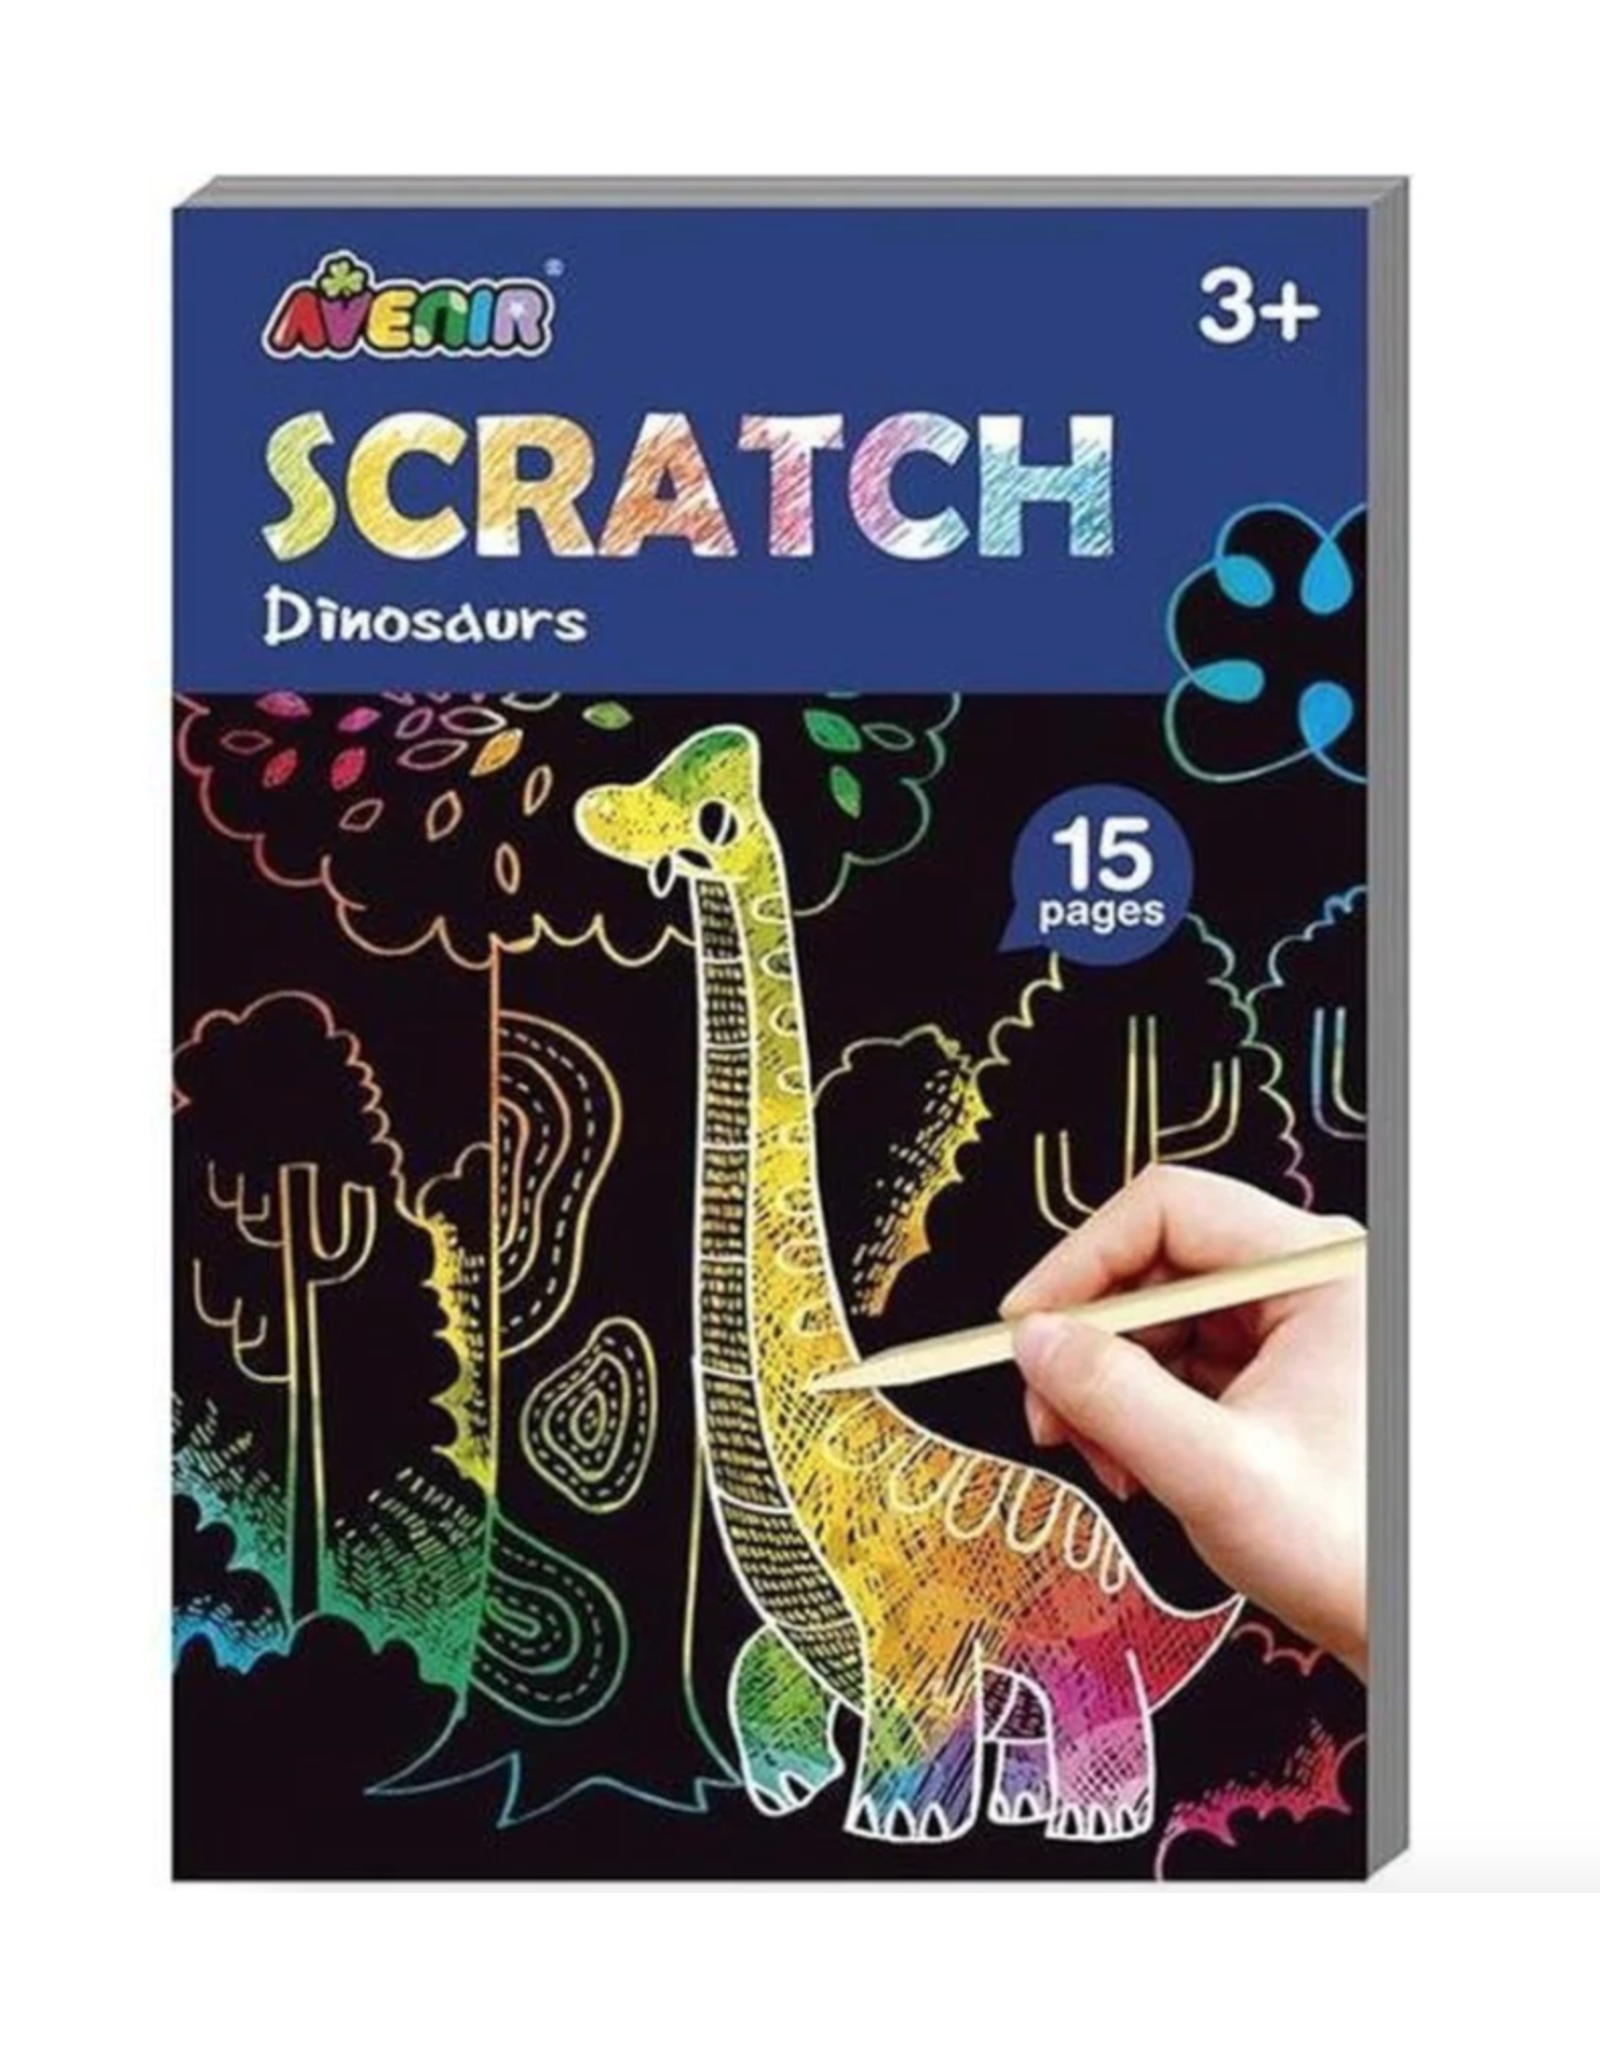 Avenir Mini Scratch Book Dinosaurs